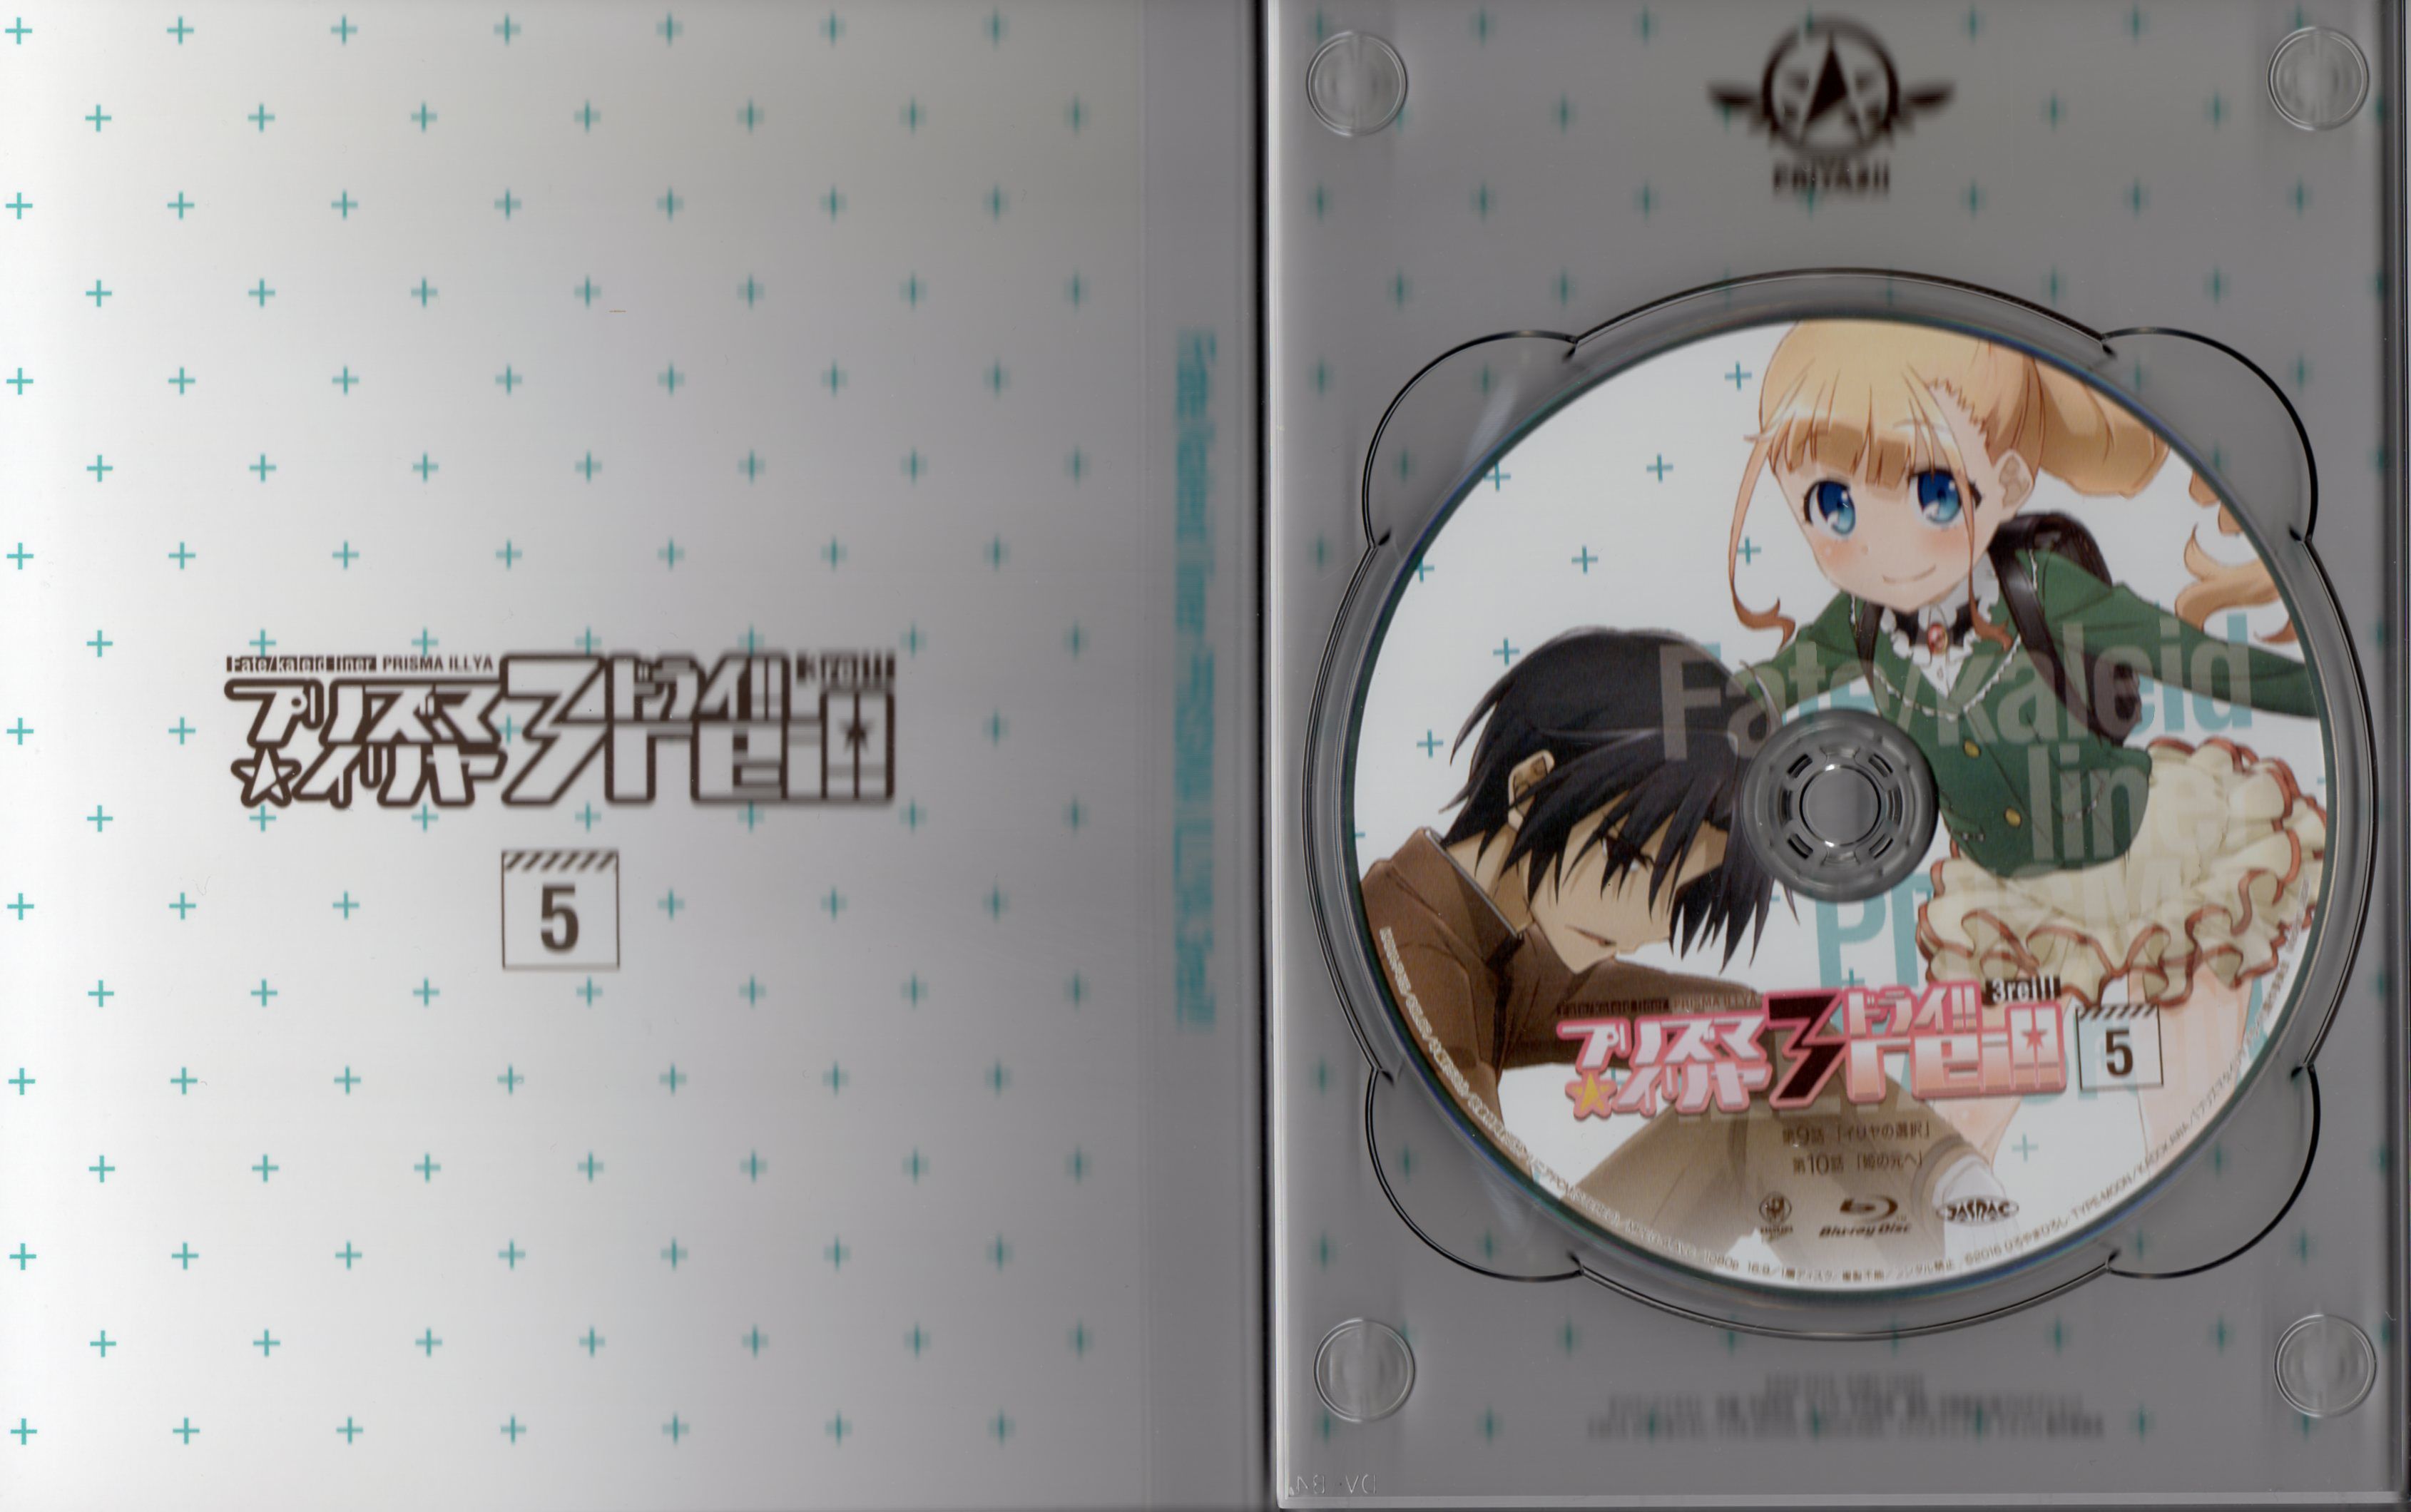 Fate/kaleid liner Prisma ☆ Ilya dry! BD vol. 5 "award animation Nightgown of Erica! reveal a kinky night dolls of sleeping! 」 115